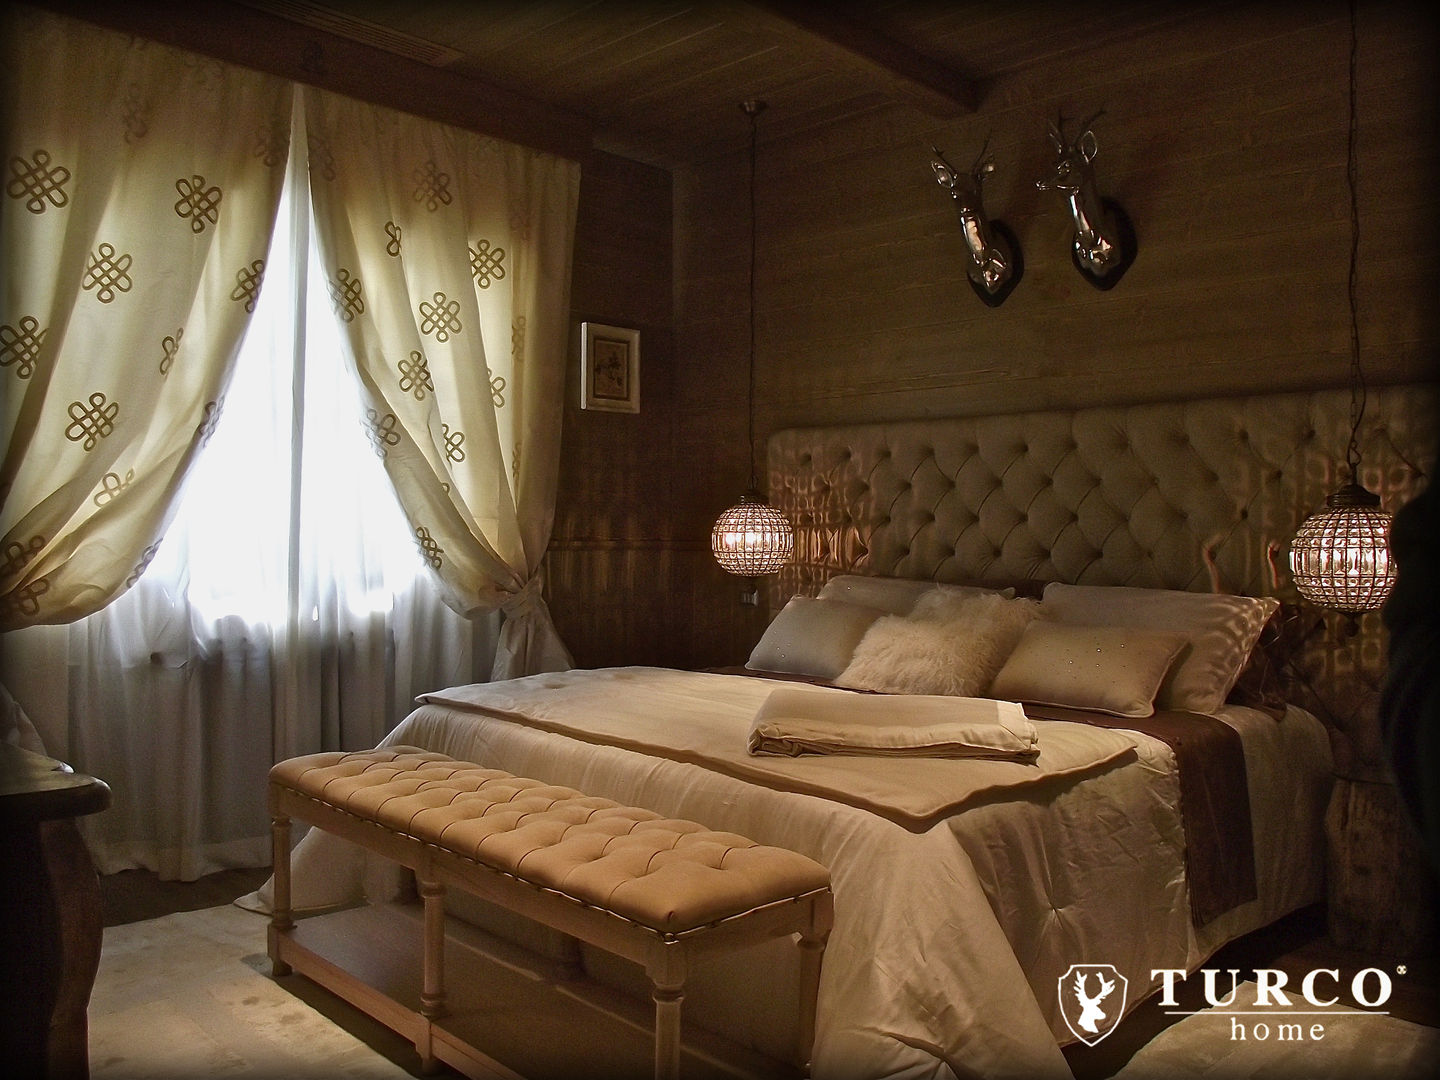 BAITA DI MONTAGNA, turco home srl turco home srl Rustic style bedroom